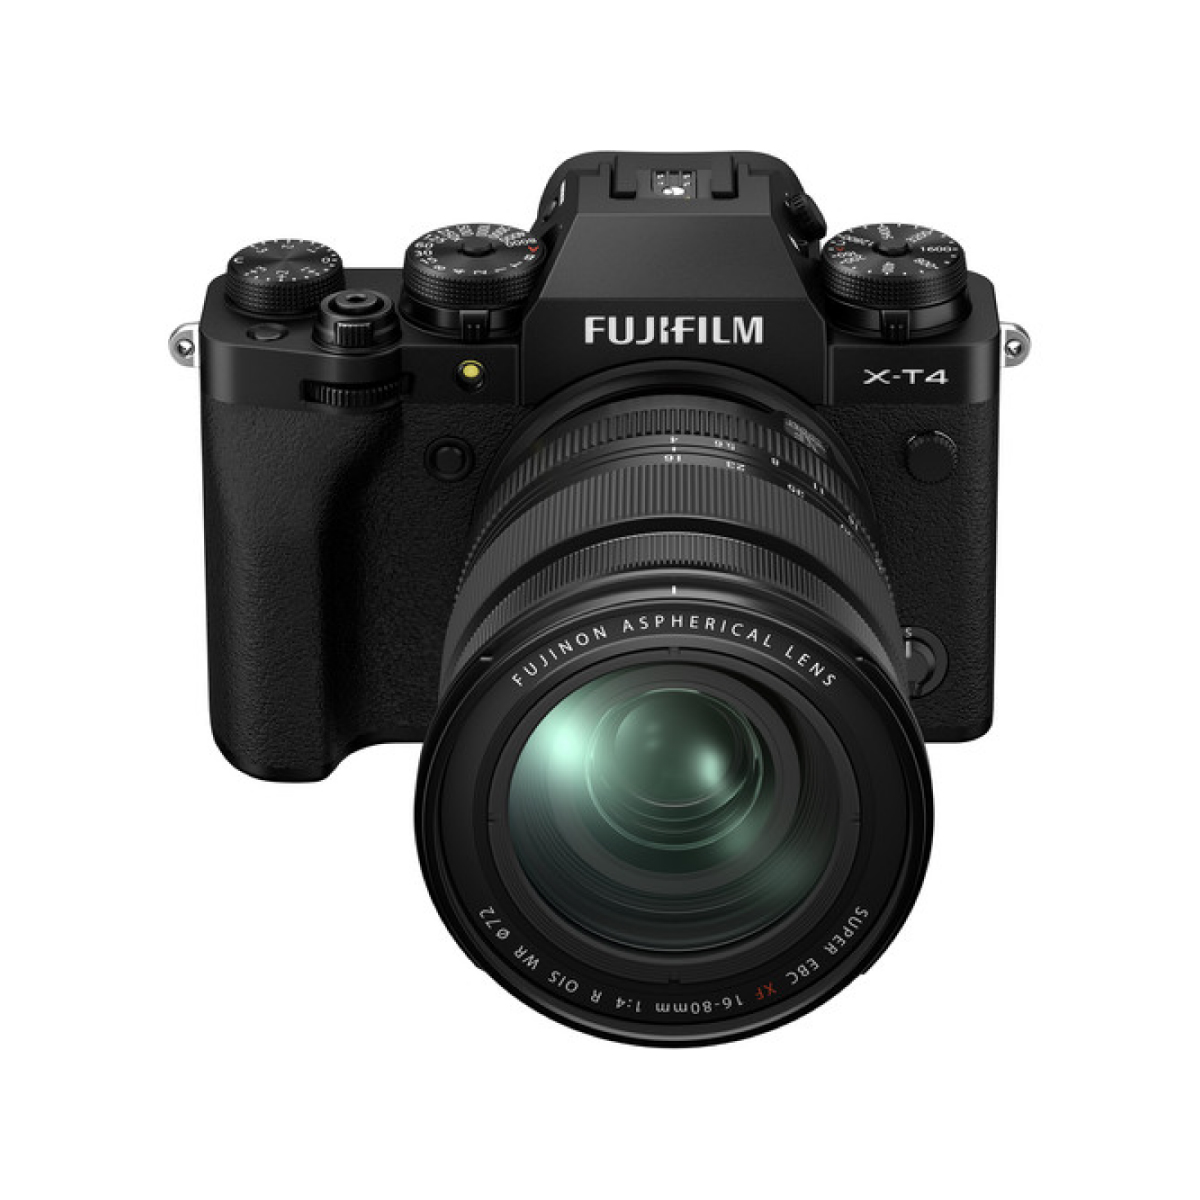 Fujifilm X-T4 26 MP Mirrorless Camera Body with XF16-80mm Lens – Black (9)